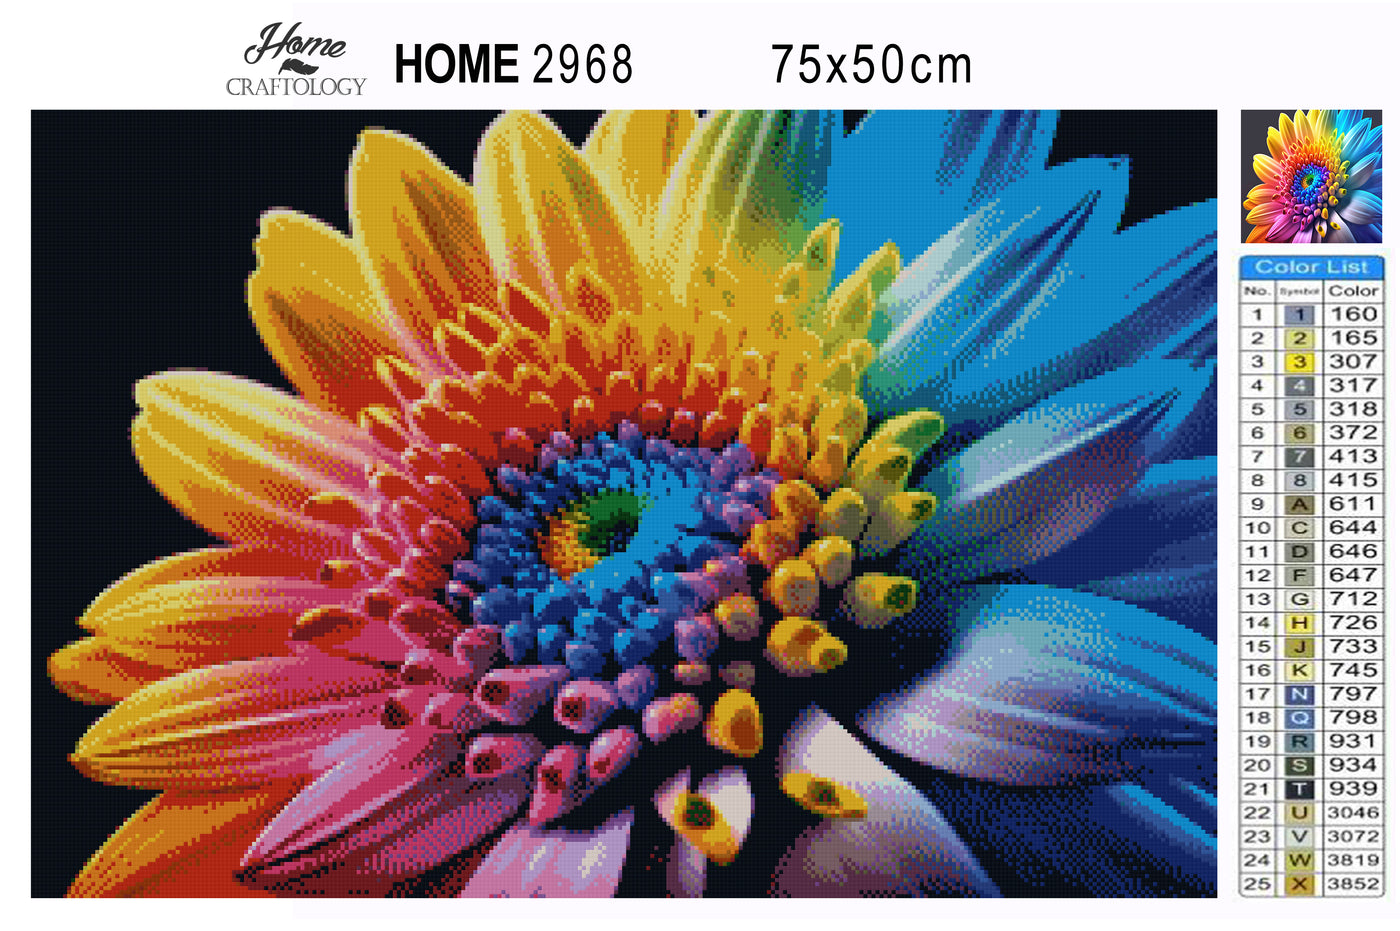 Colorful Flower Close-up - Premium Diamond Painting Kit